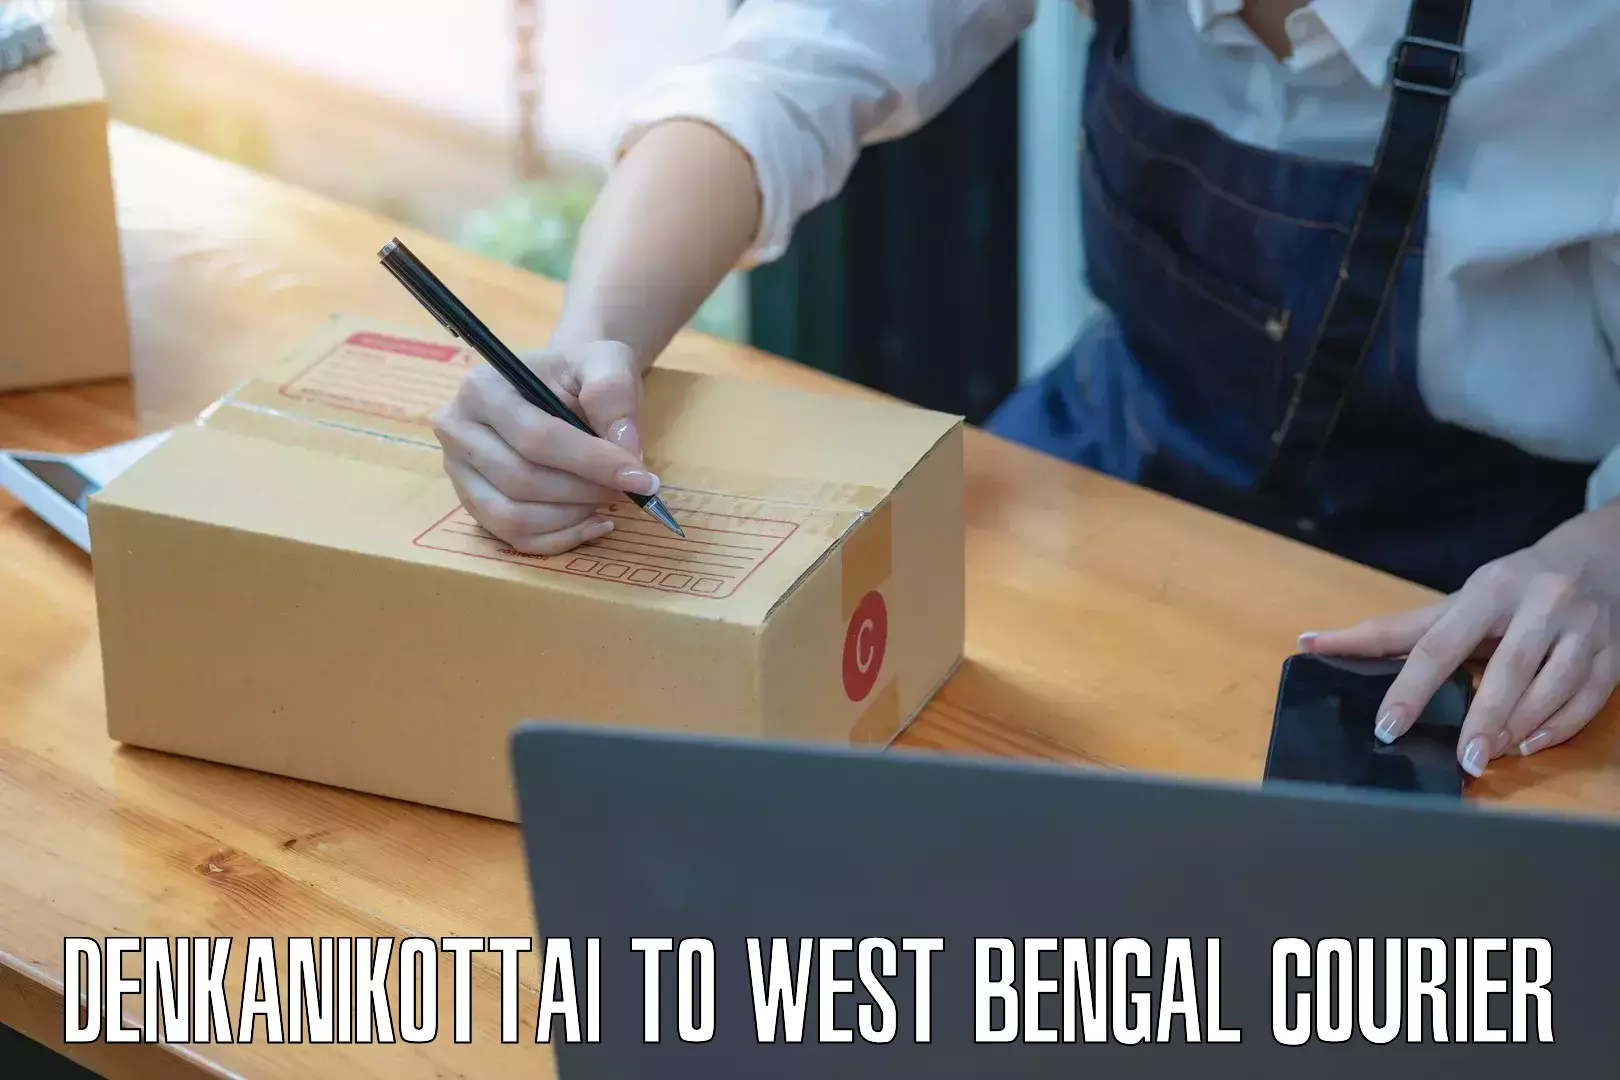 Modern courier technology Denkanikottai to West Bengal